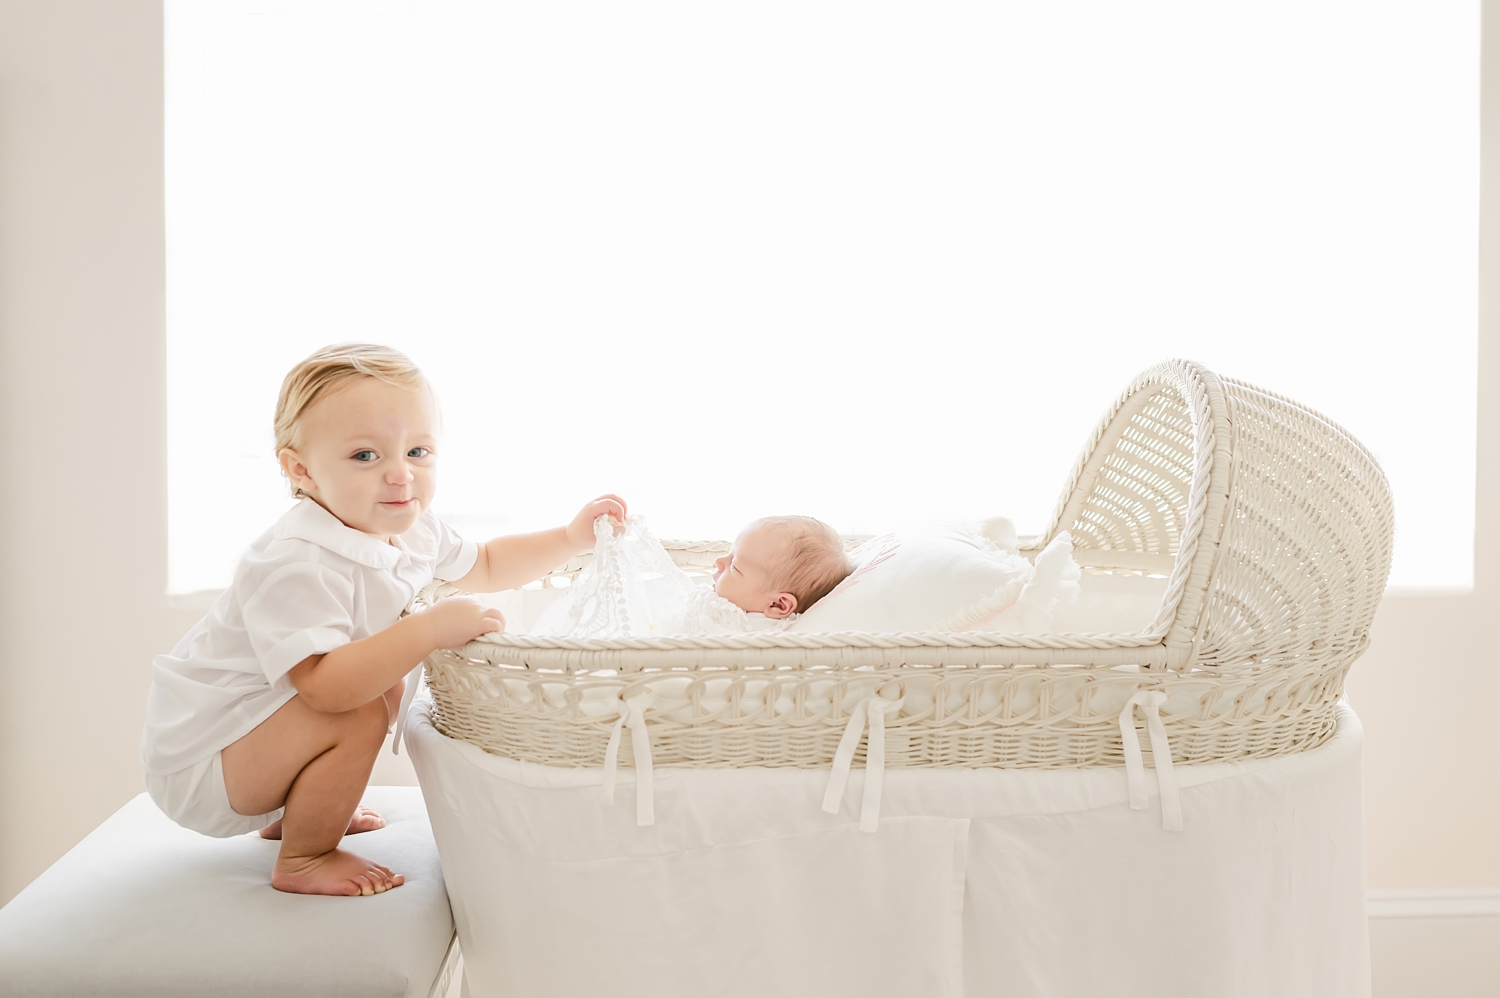 baby boy dressed in white peeking under covers of newborn baby girl in bassinet in white nursery